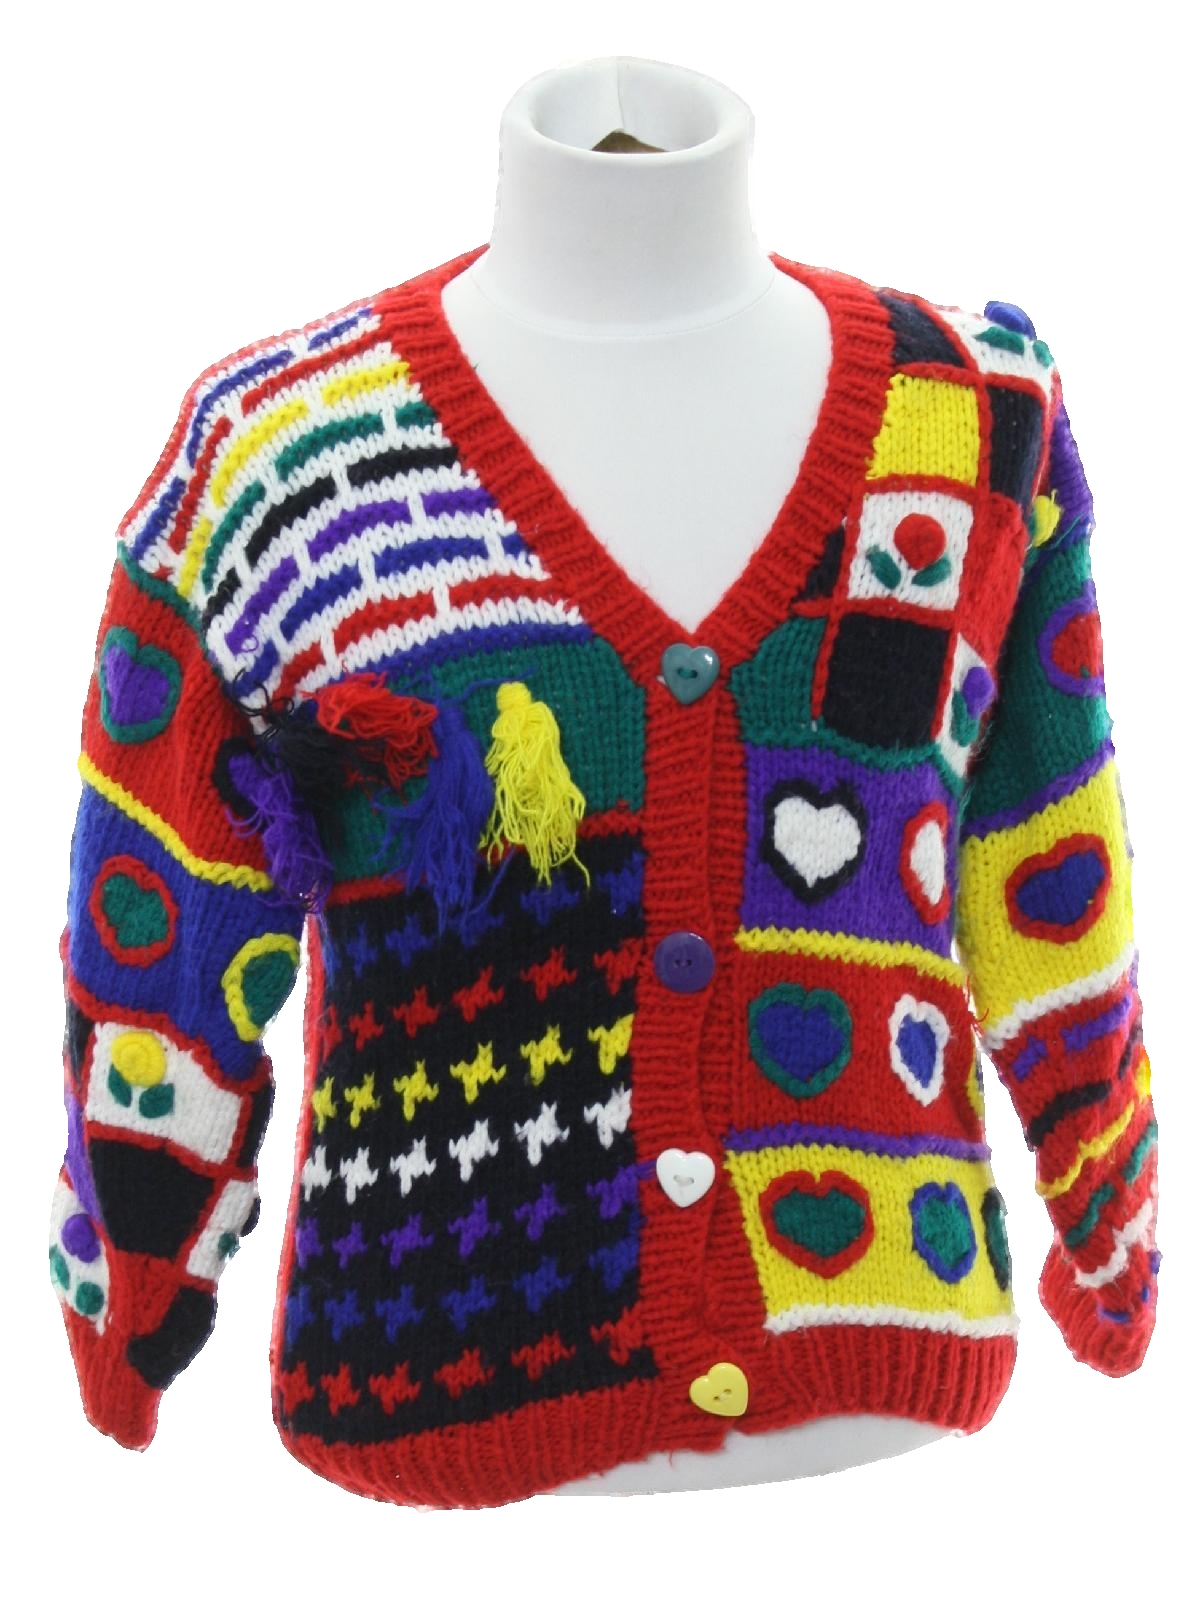 Retro 1980's Caridgan Sweater (Rachels Kids) : 80s style (made more ...